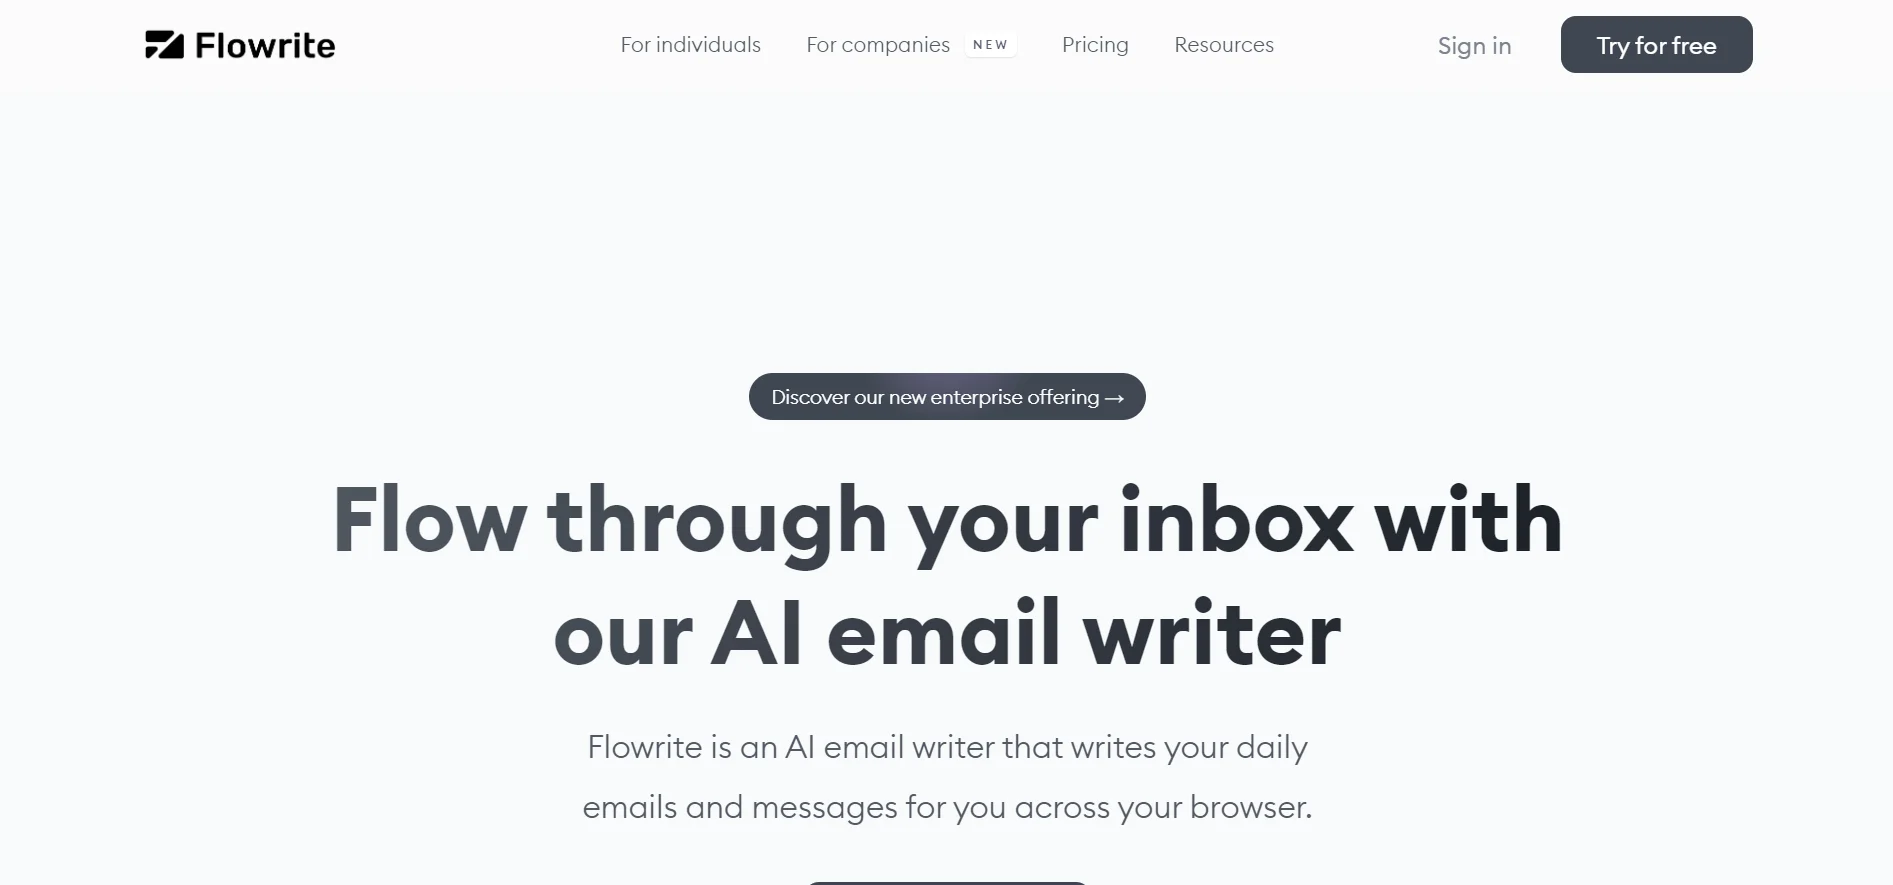 Flowrite AI email writer